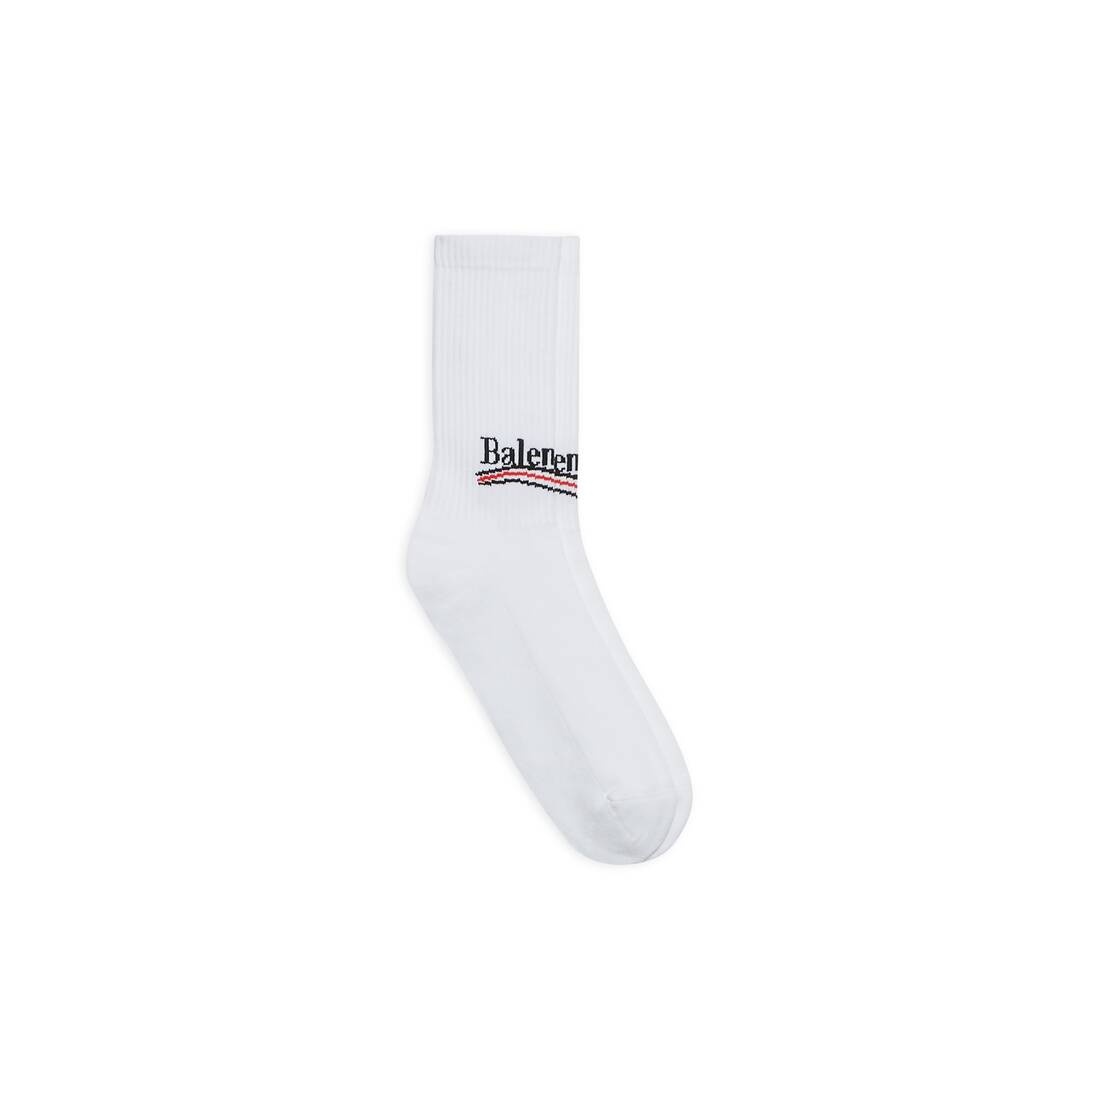 Men's Political Campaign Tennis Socks in White - 1